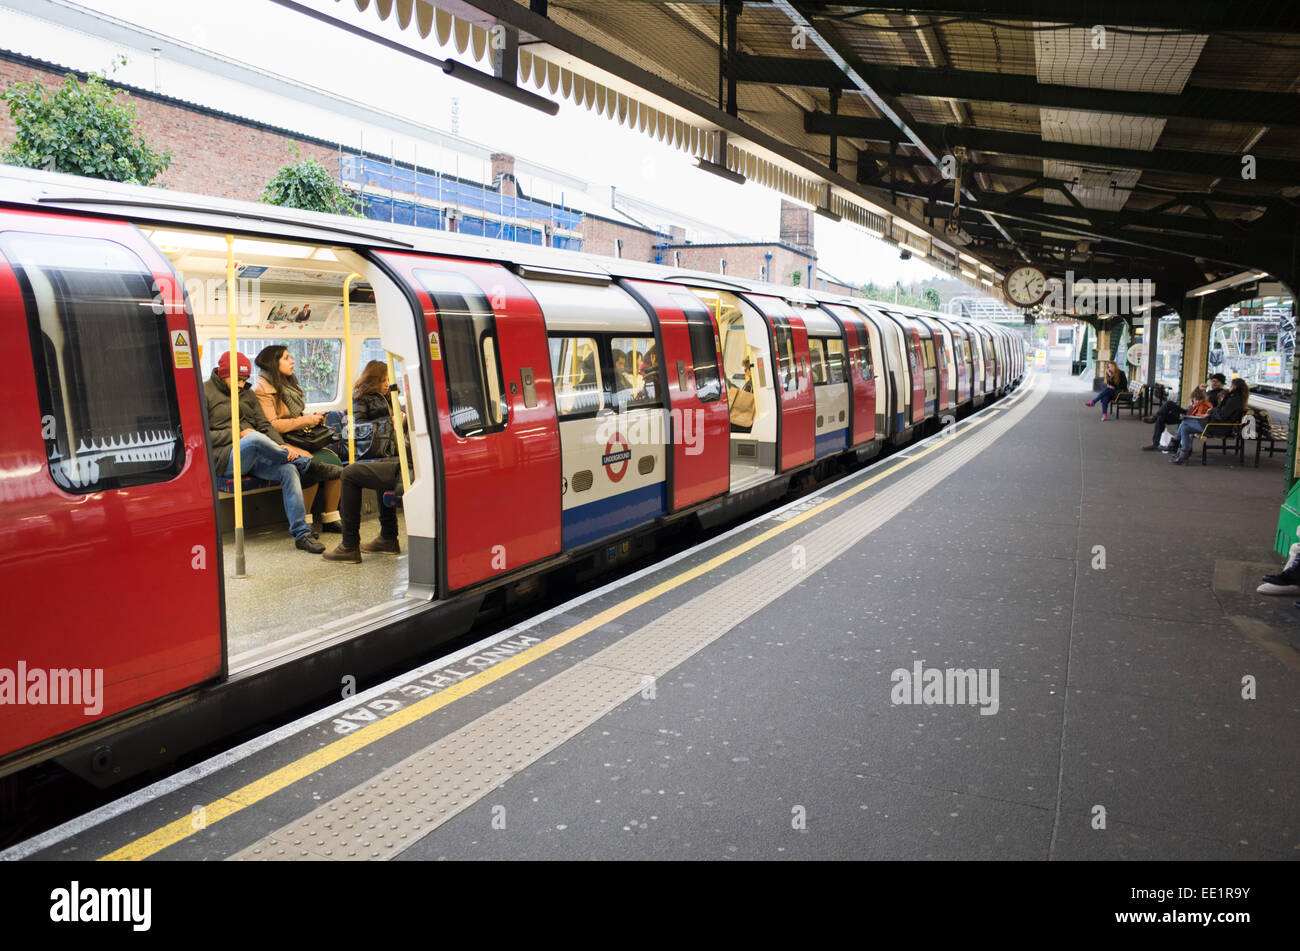 Una Metropolitana a una piattaforma in corrispondenza di una stazione in Gran Bretagna Foto Stock